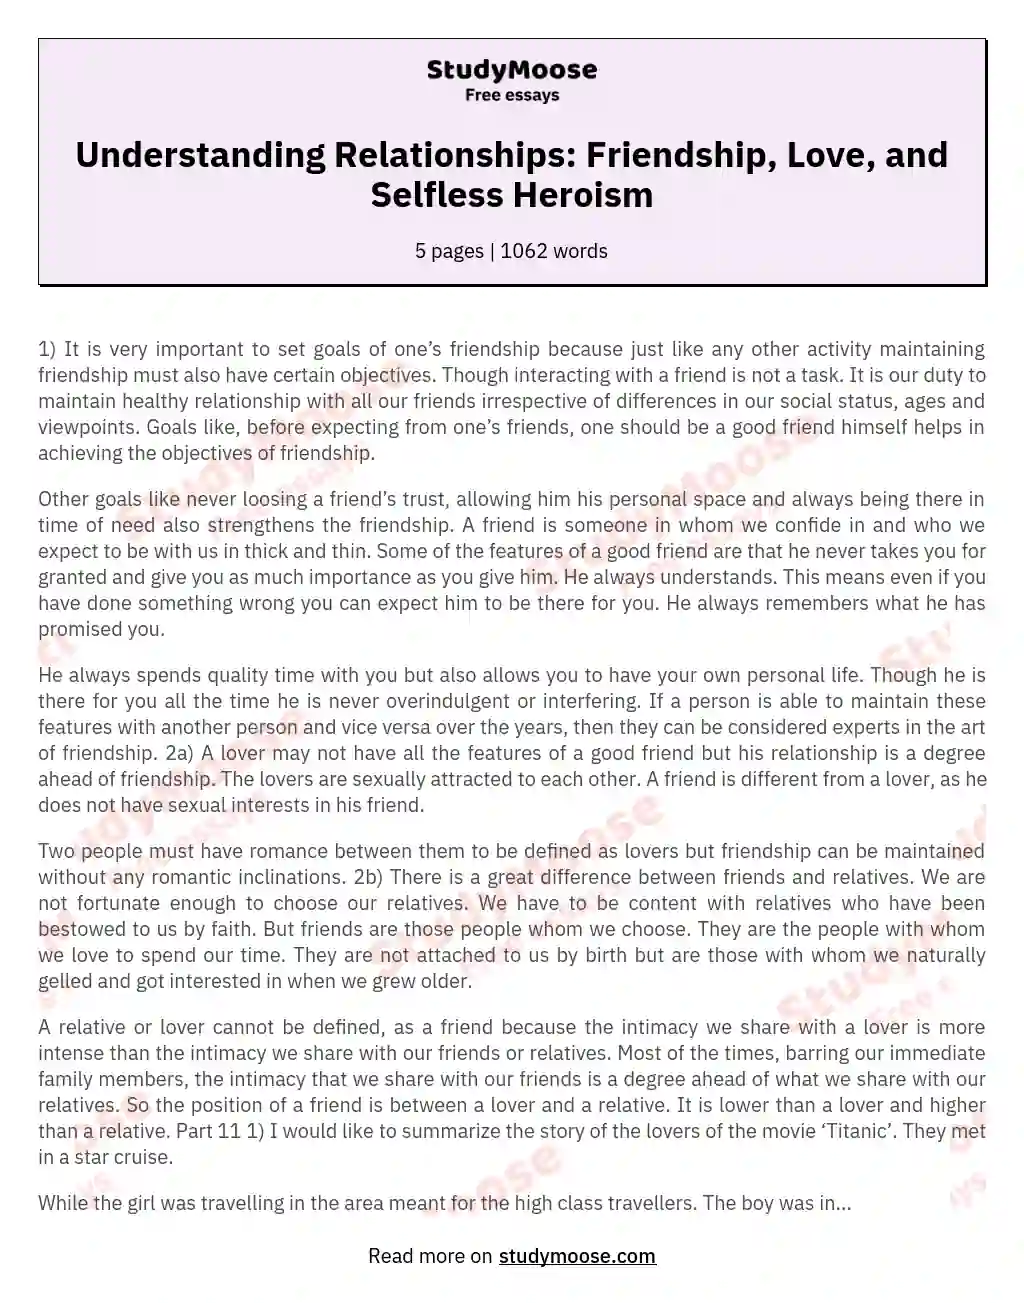 Understanding Relationships: Friendship, Love, and Selfless Heroism essay